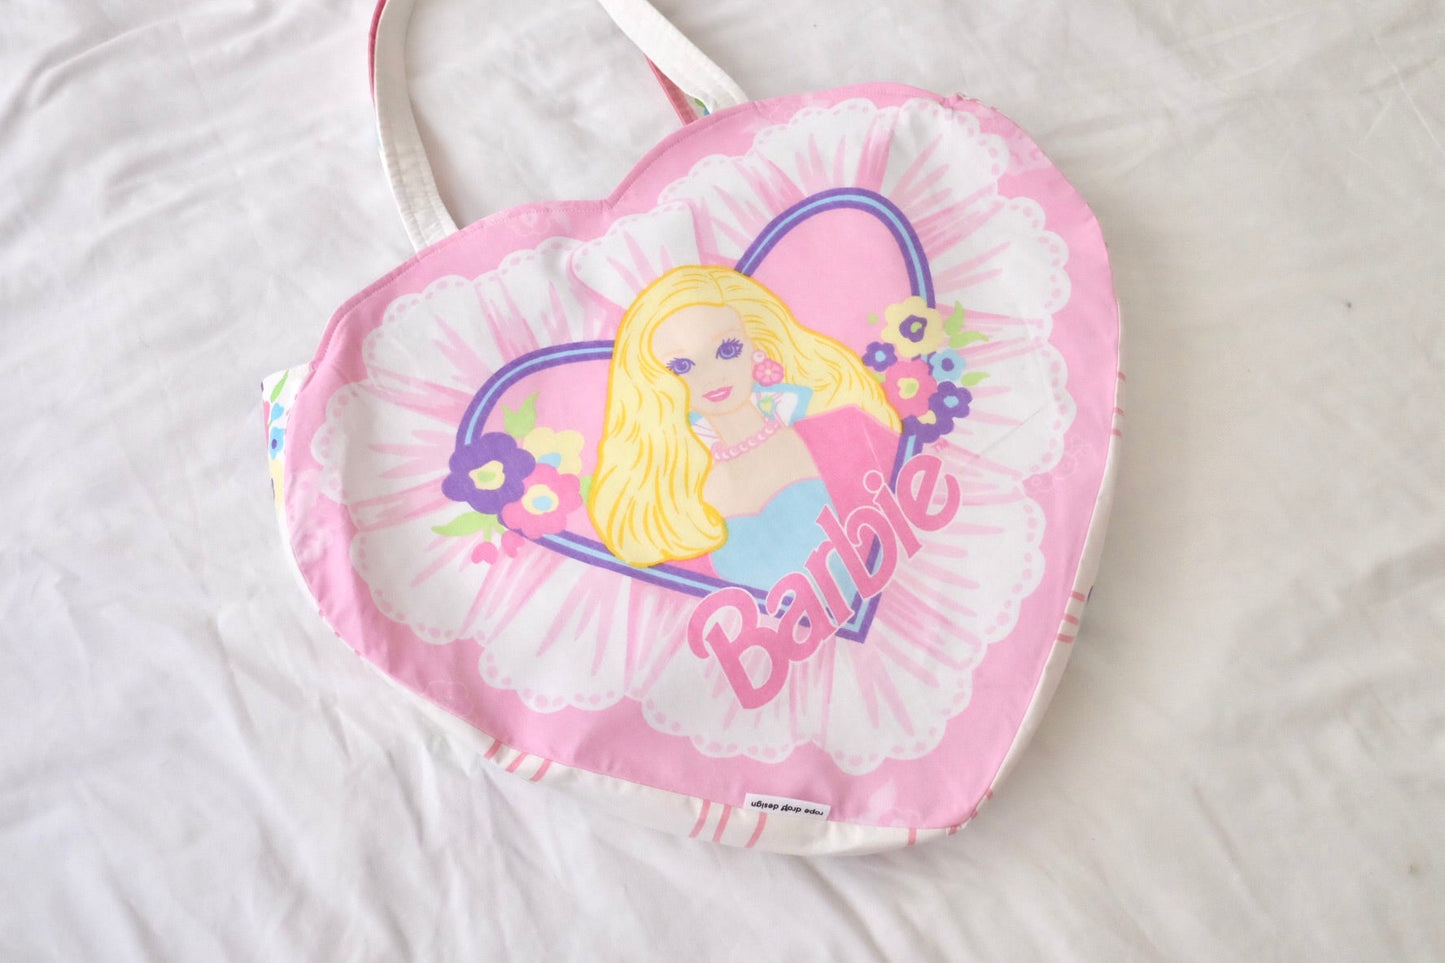 custom heart tote bag